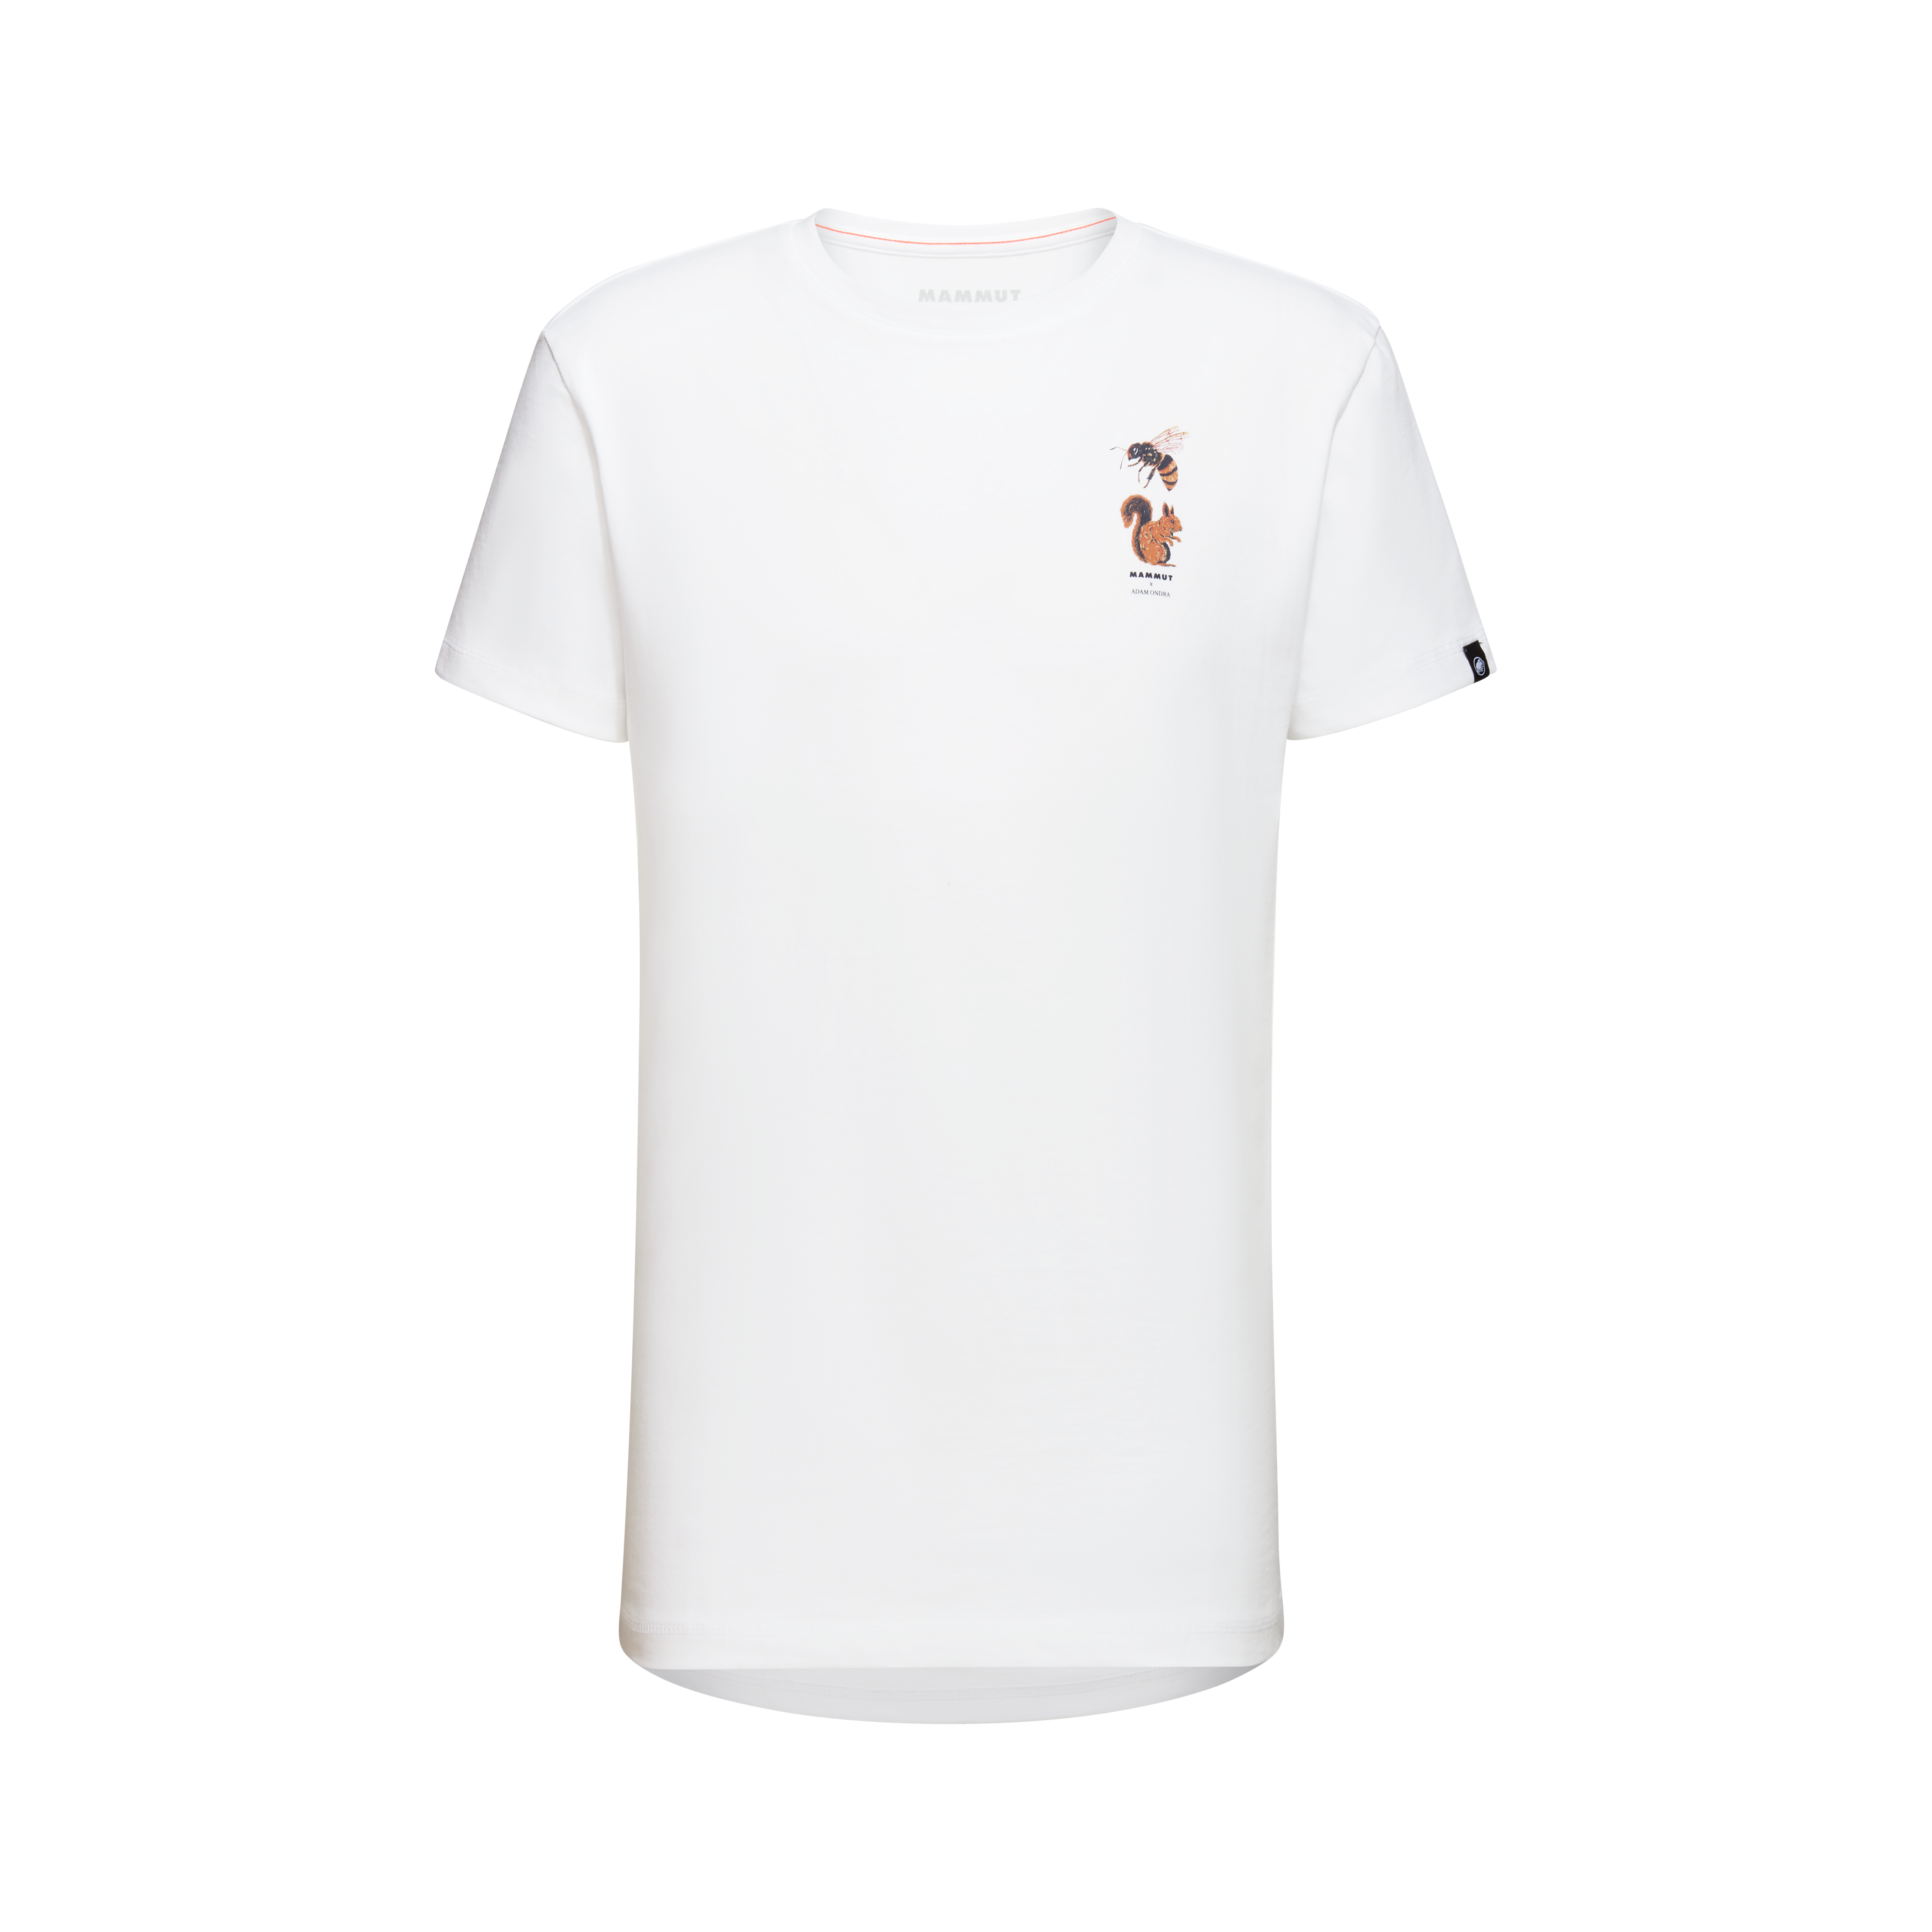 Mammut x Adam Ondra T-Shirt Men - white, XL thumbnail